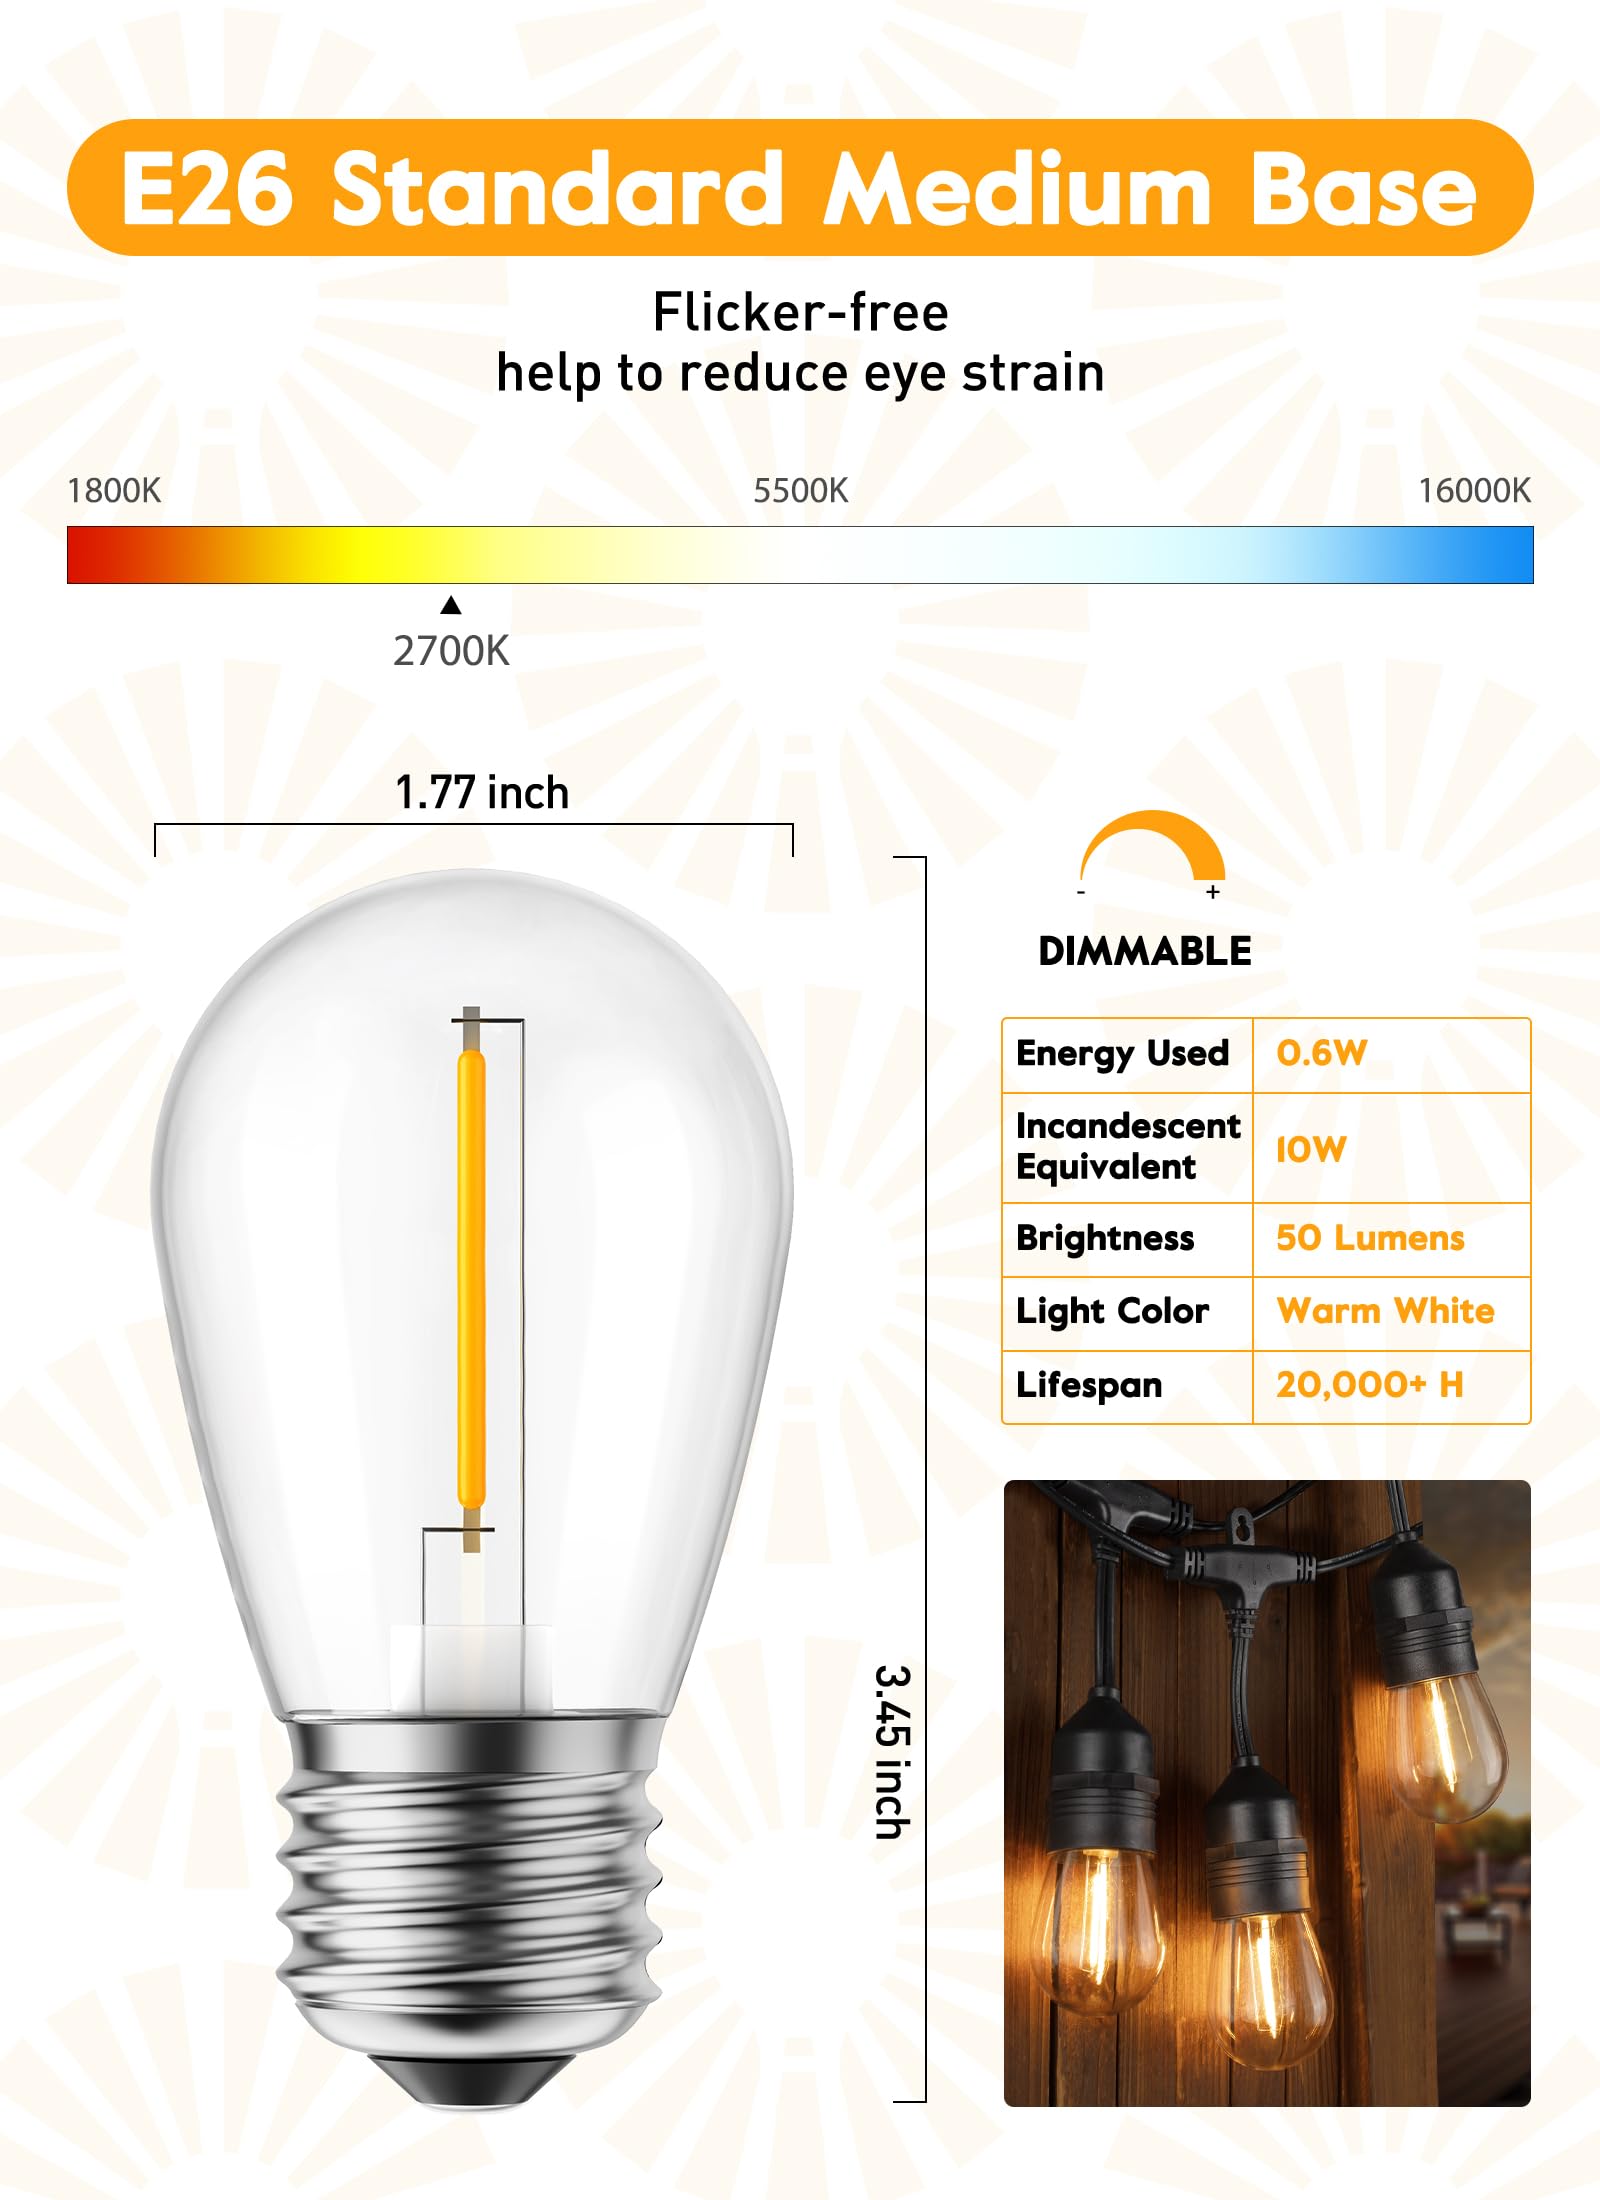 15 Count / LED Bulbs / Warm White